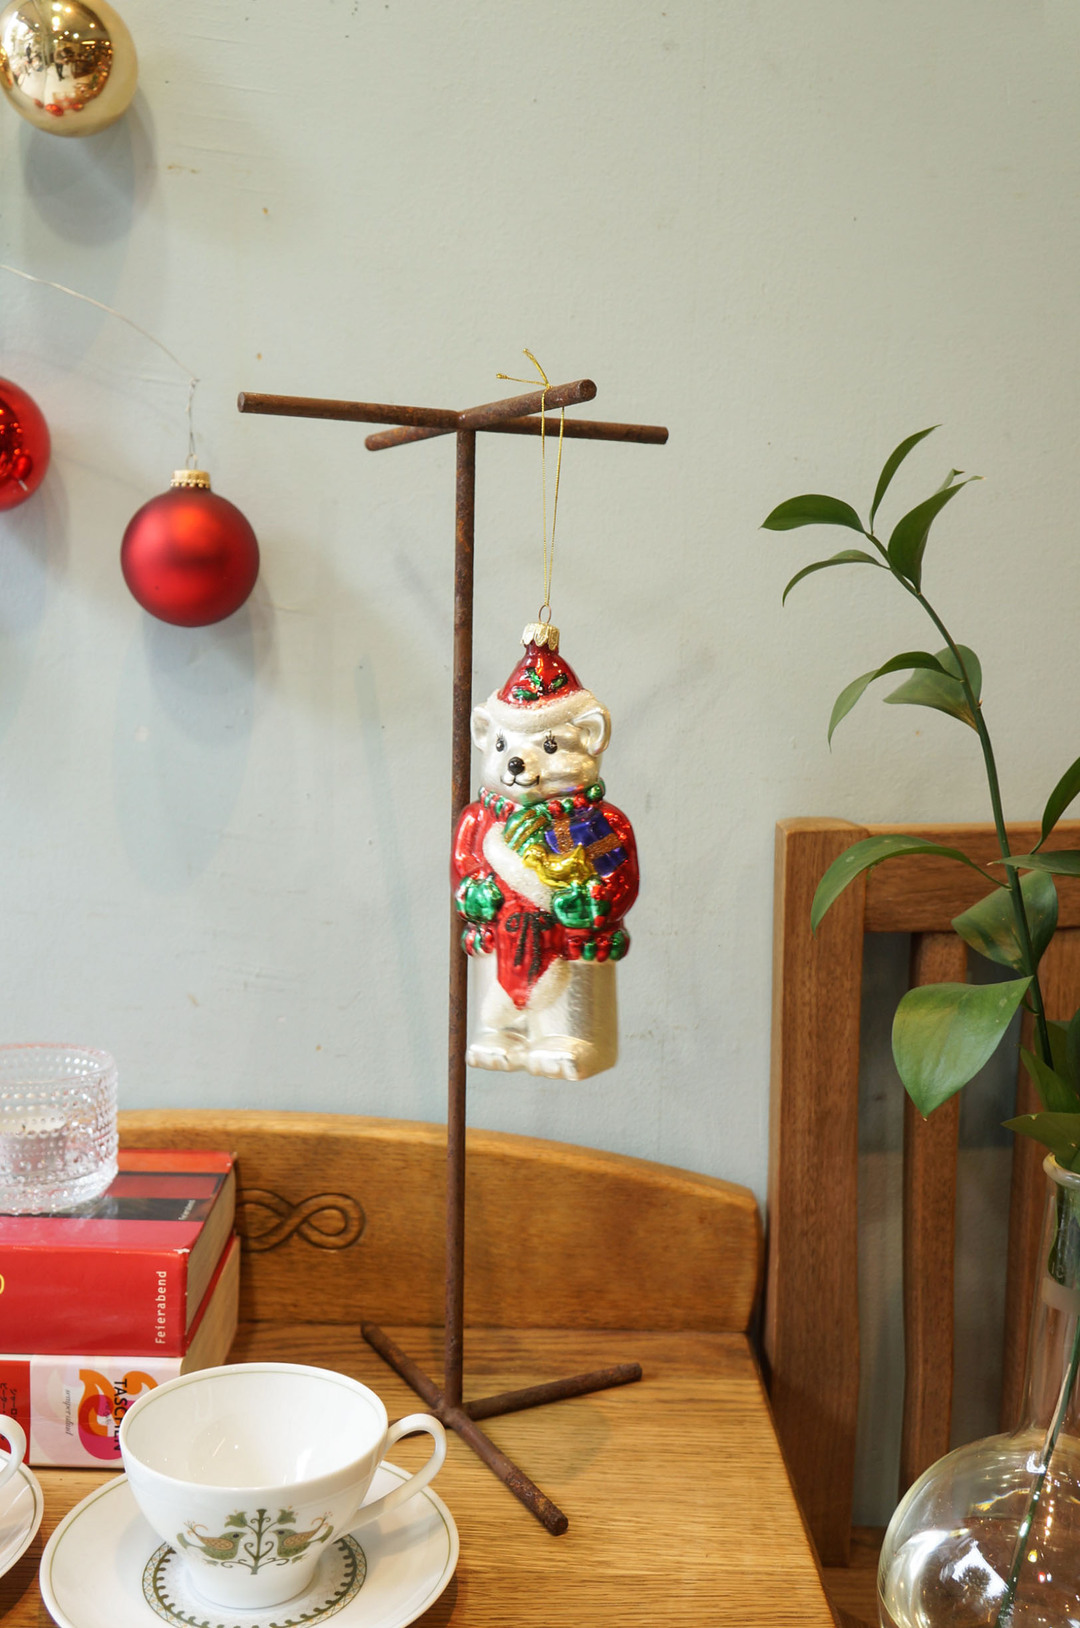 Blown Glass Christmas Ornament Doll/クリスマスオーナメント 吹きガラス レトロ 人形 くま 5